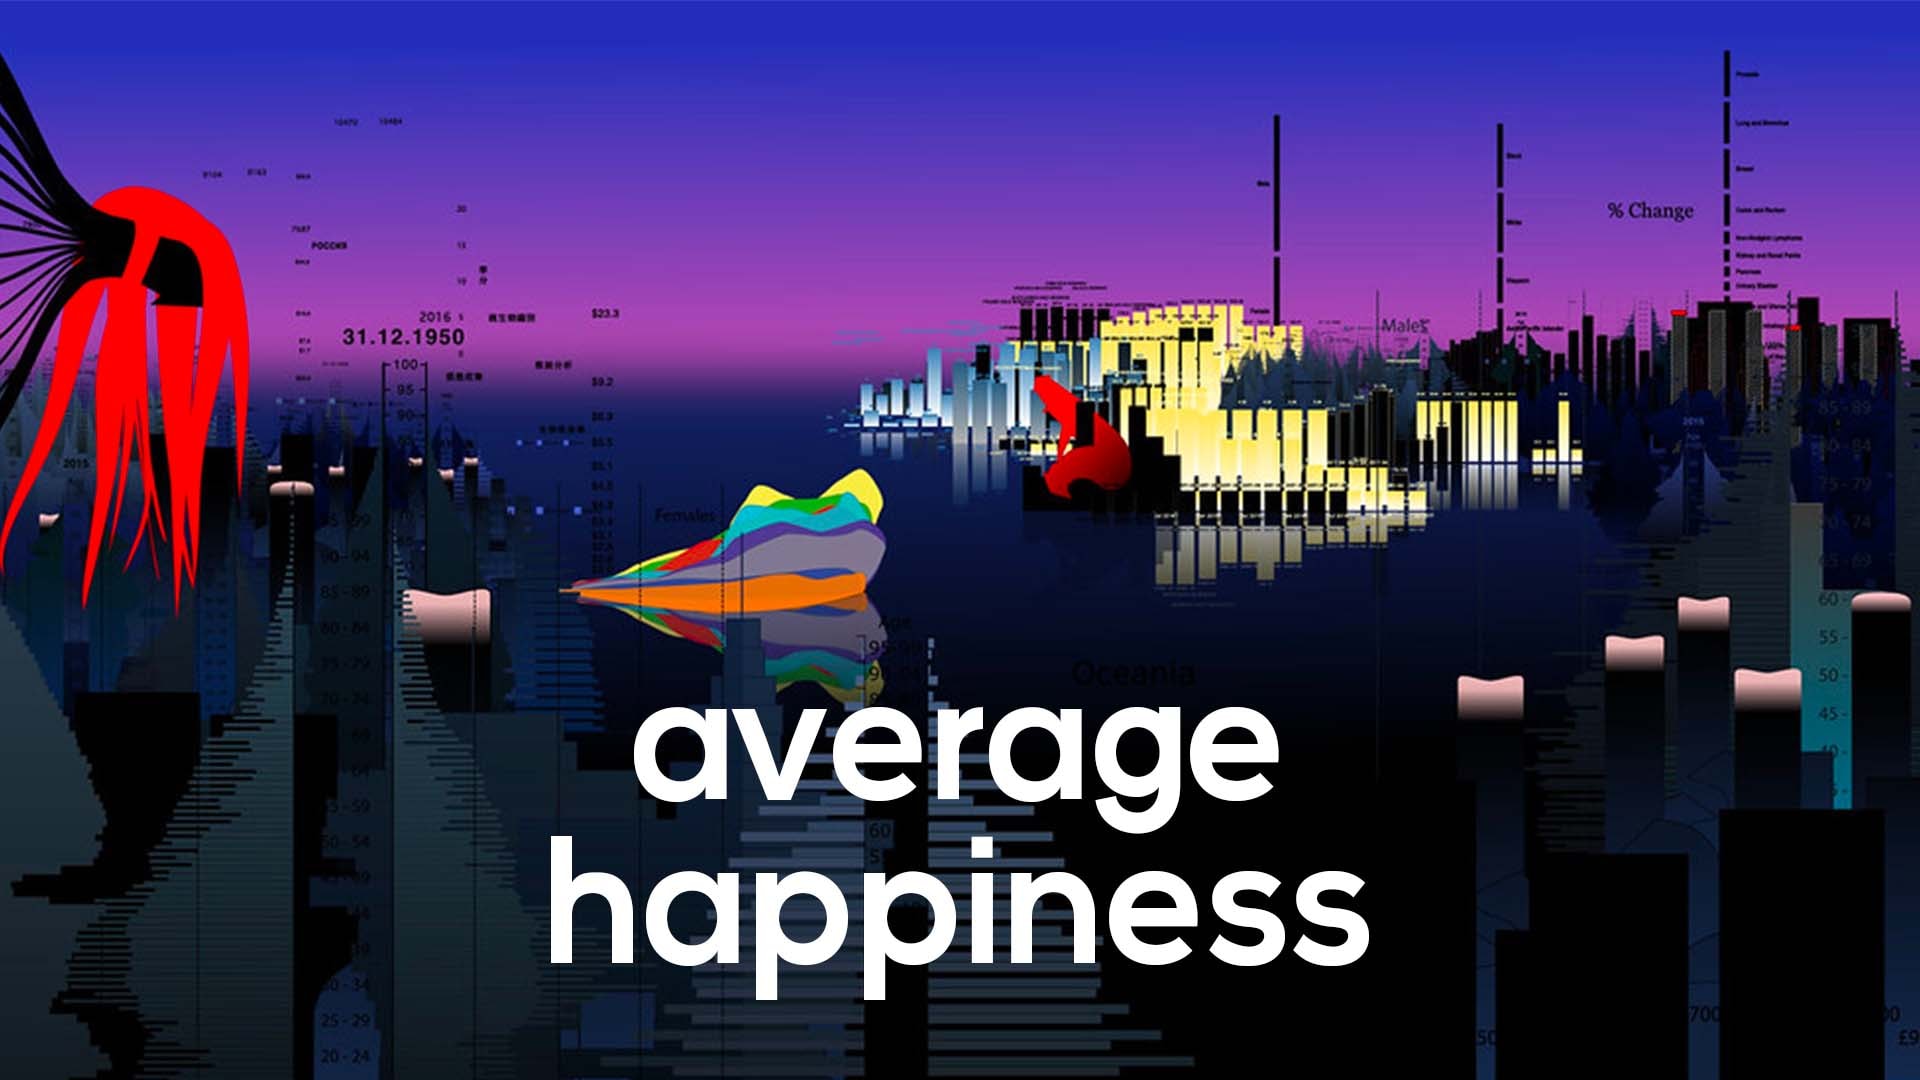 Average Happiness